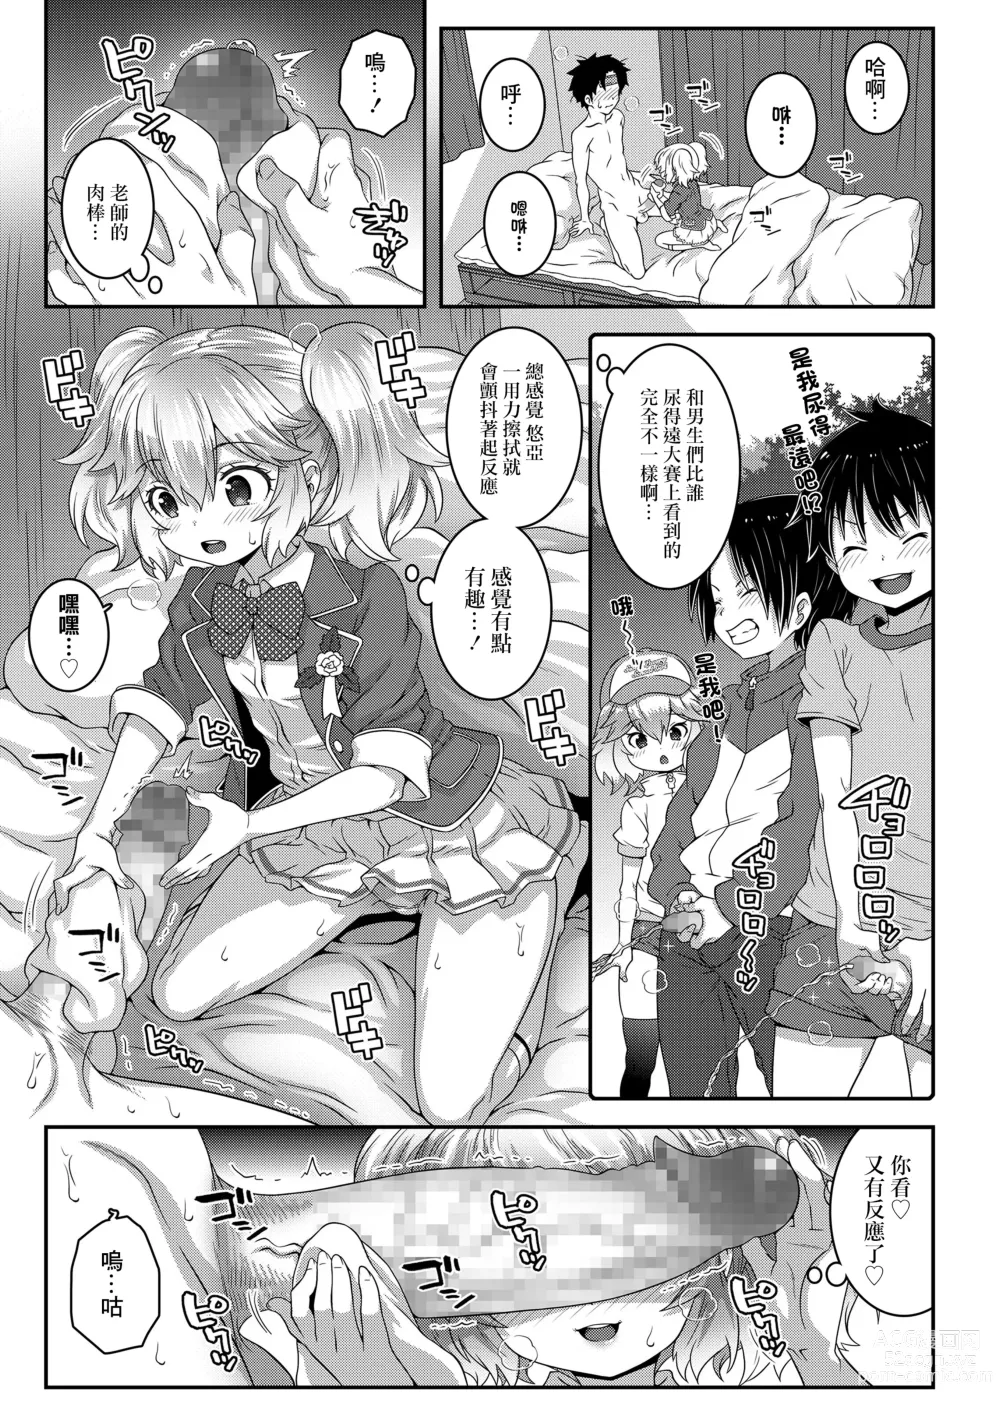 Page 5 of manga Sotsugyou Vaccine